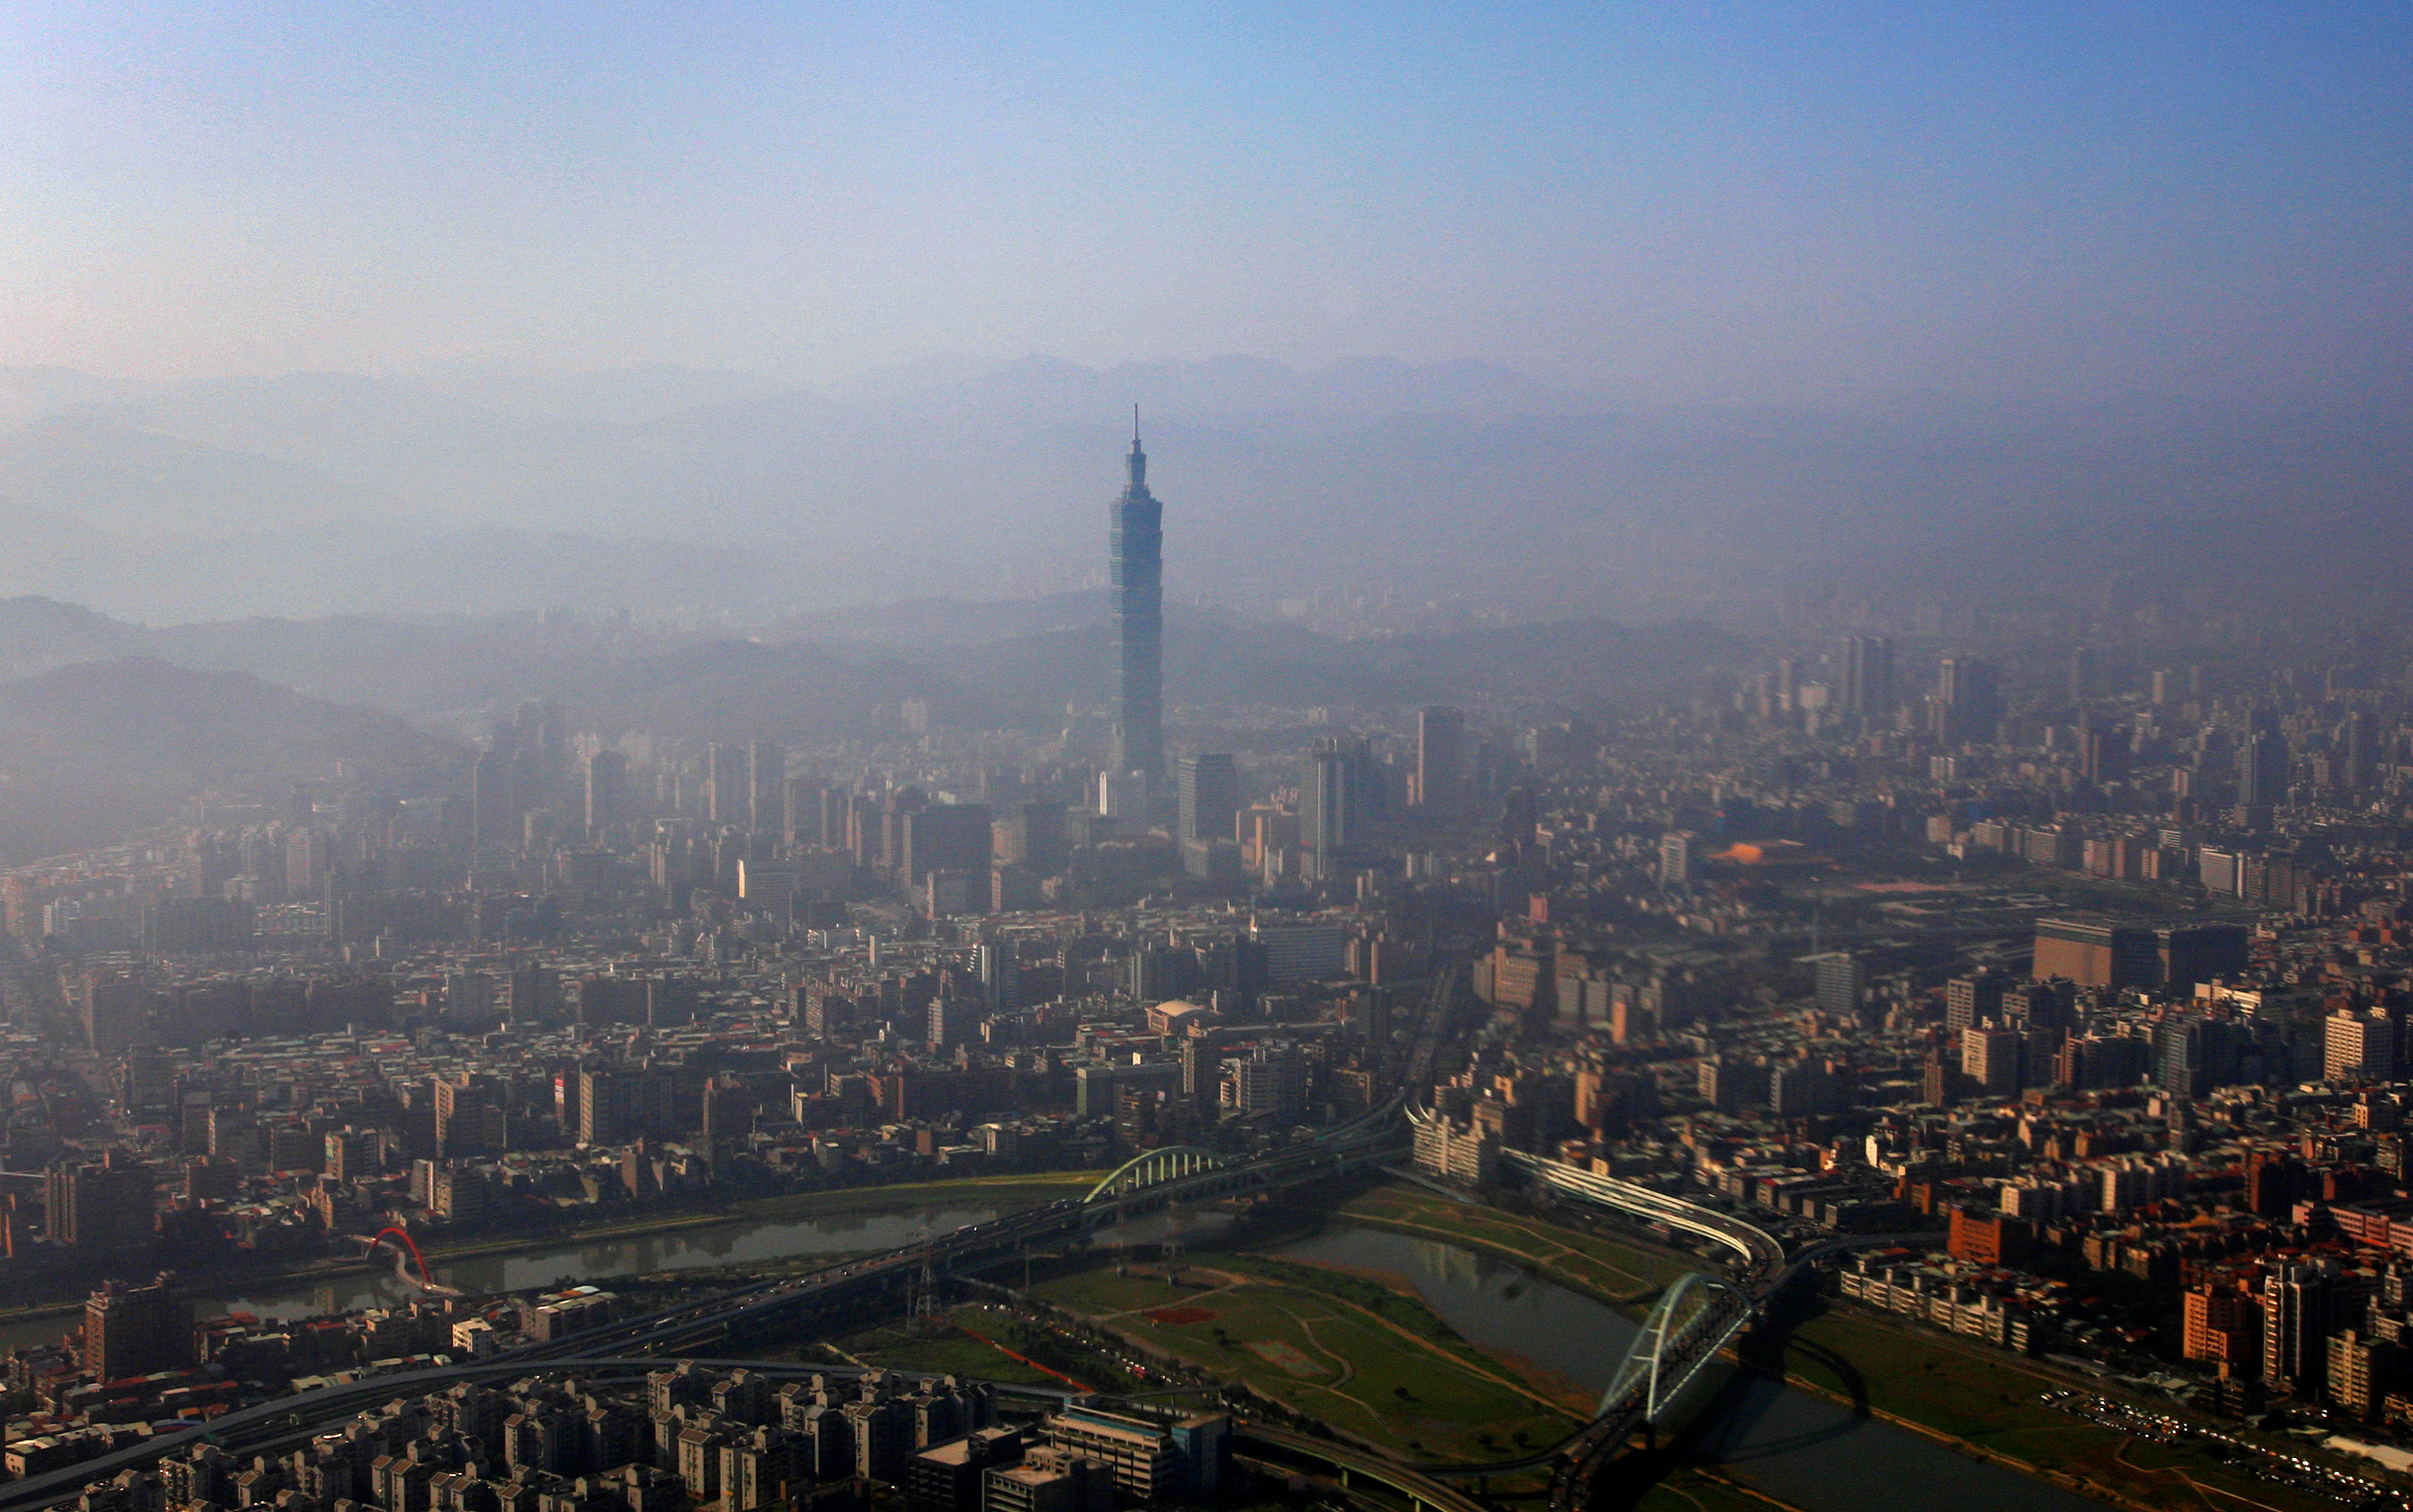 The Taipei 101 building is seen amidst the Taipei city skyline